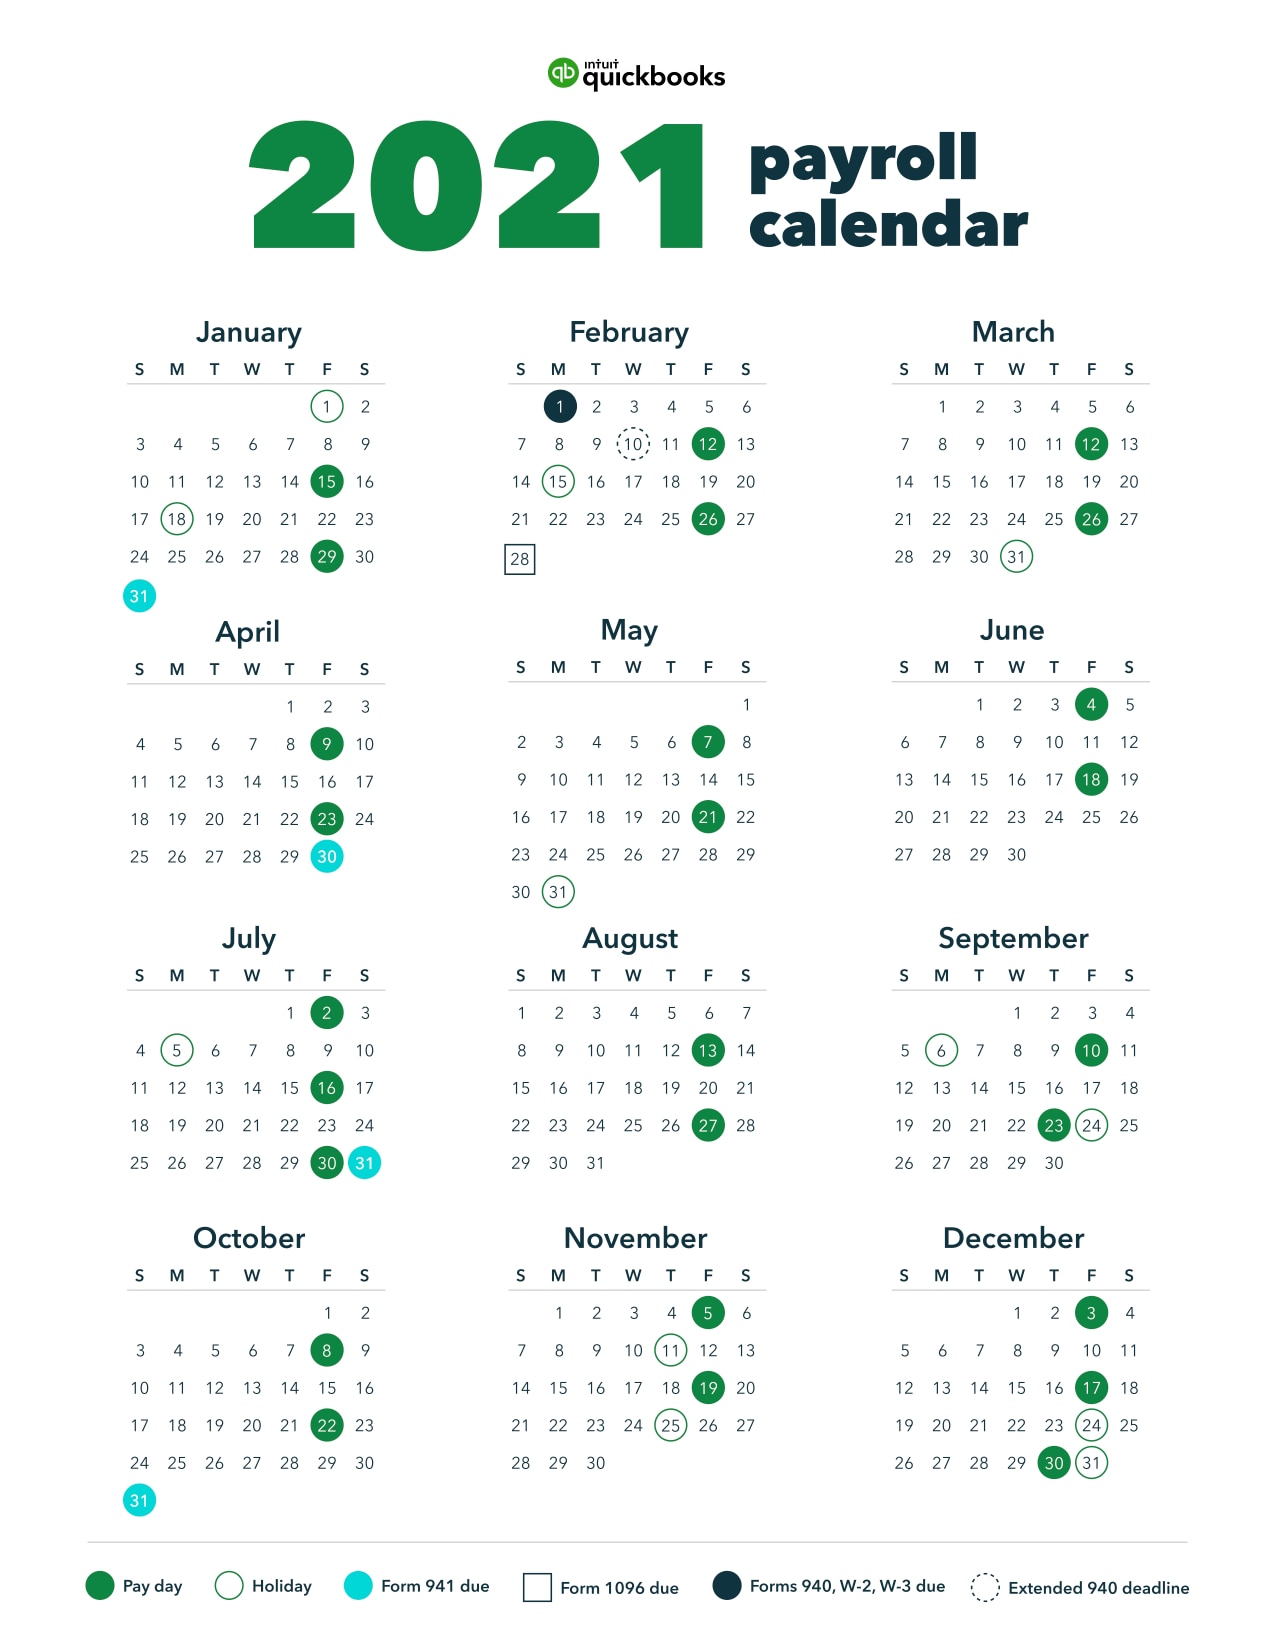 Bimonthly payroll calendar templates for 2021 QuickBooks